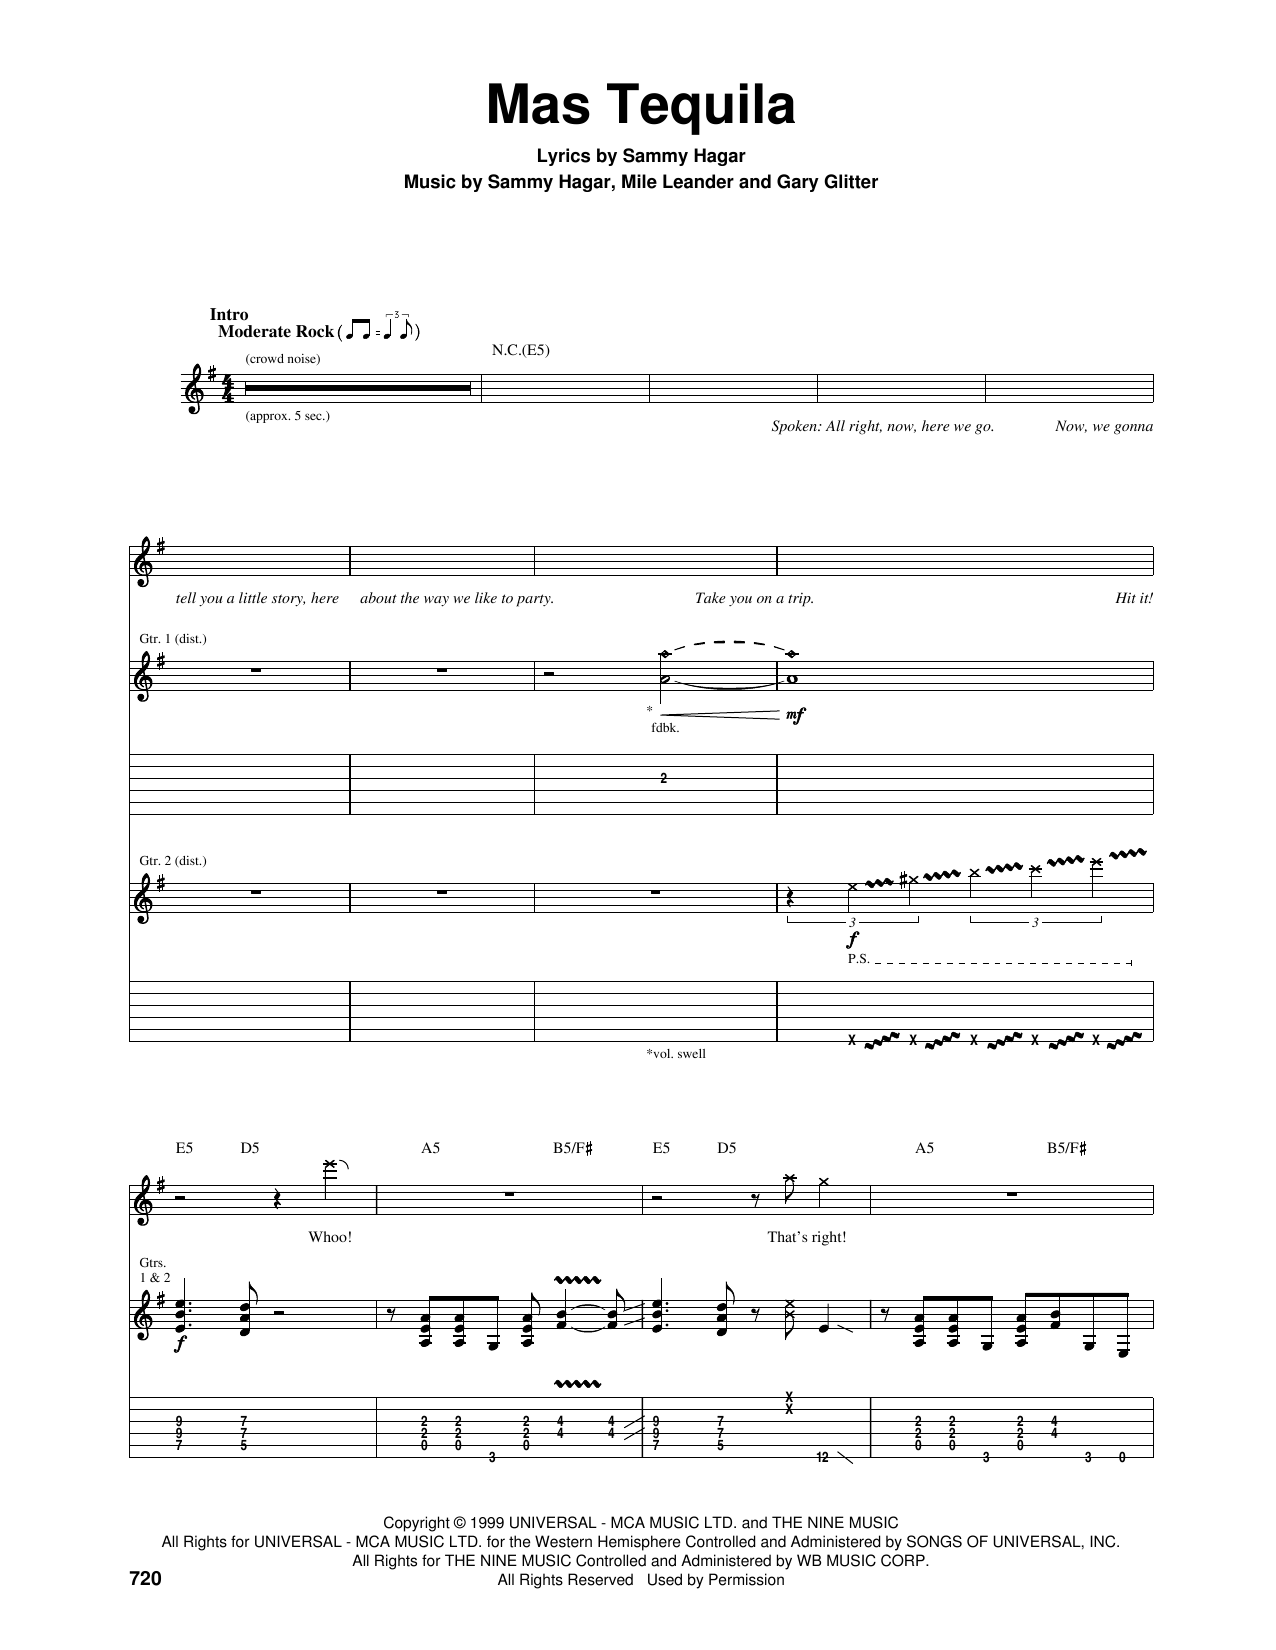 Sammy Hagar Mas Tequila Sheet Music Notes & Chords for Guitar Tab - Download or Print PDF